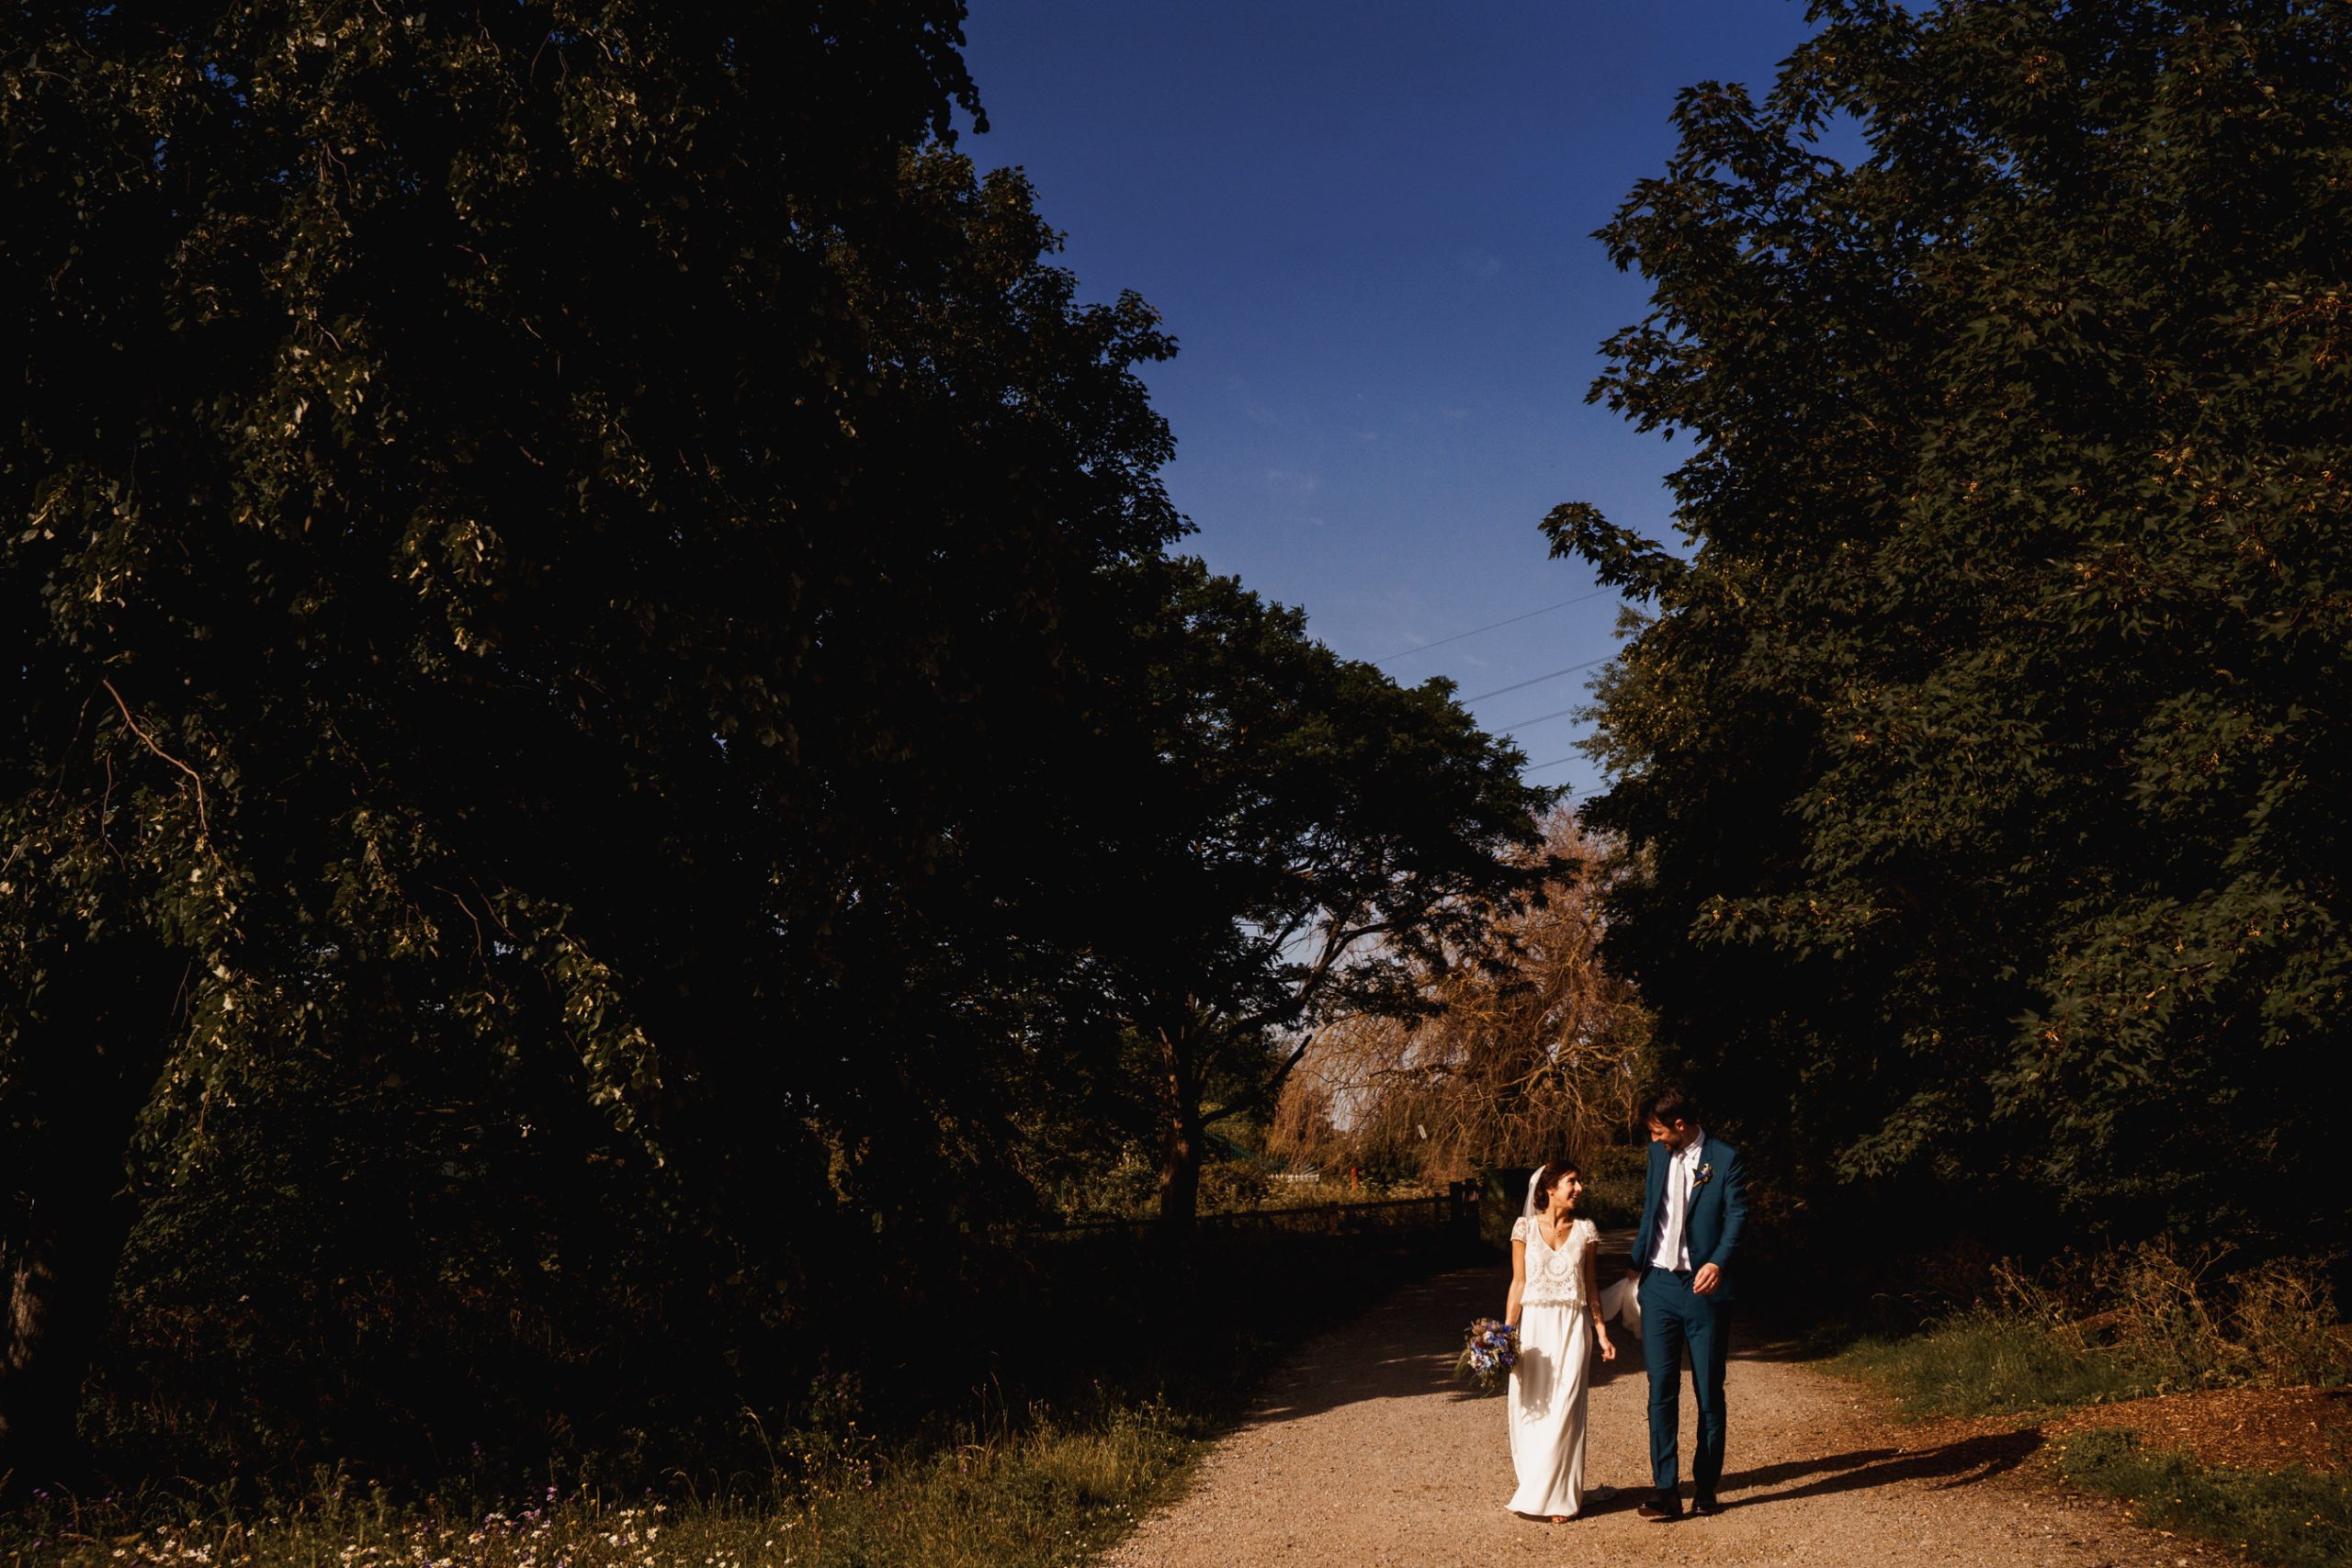 Wedding couple walking through Walthamstow Wetlands with a blue sky behind